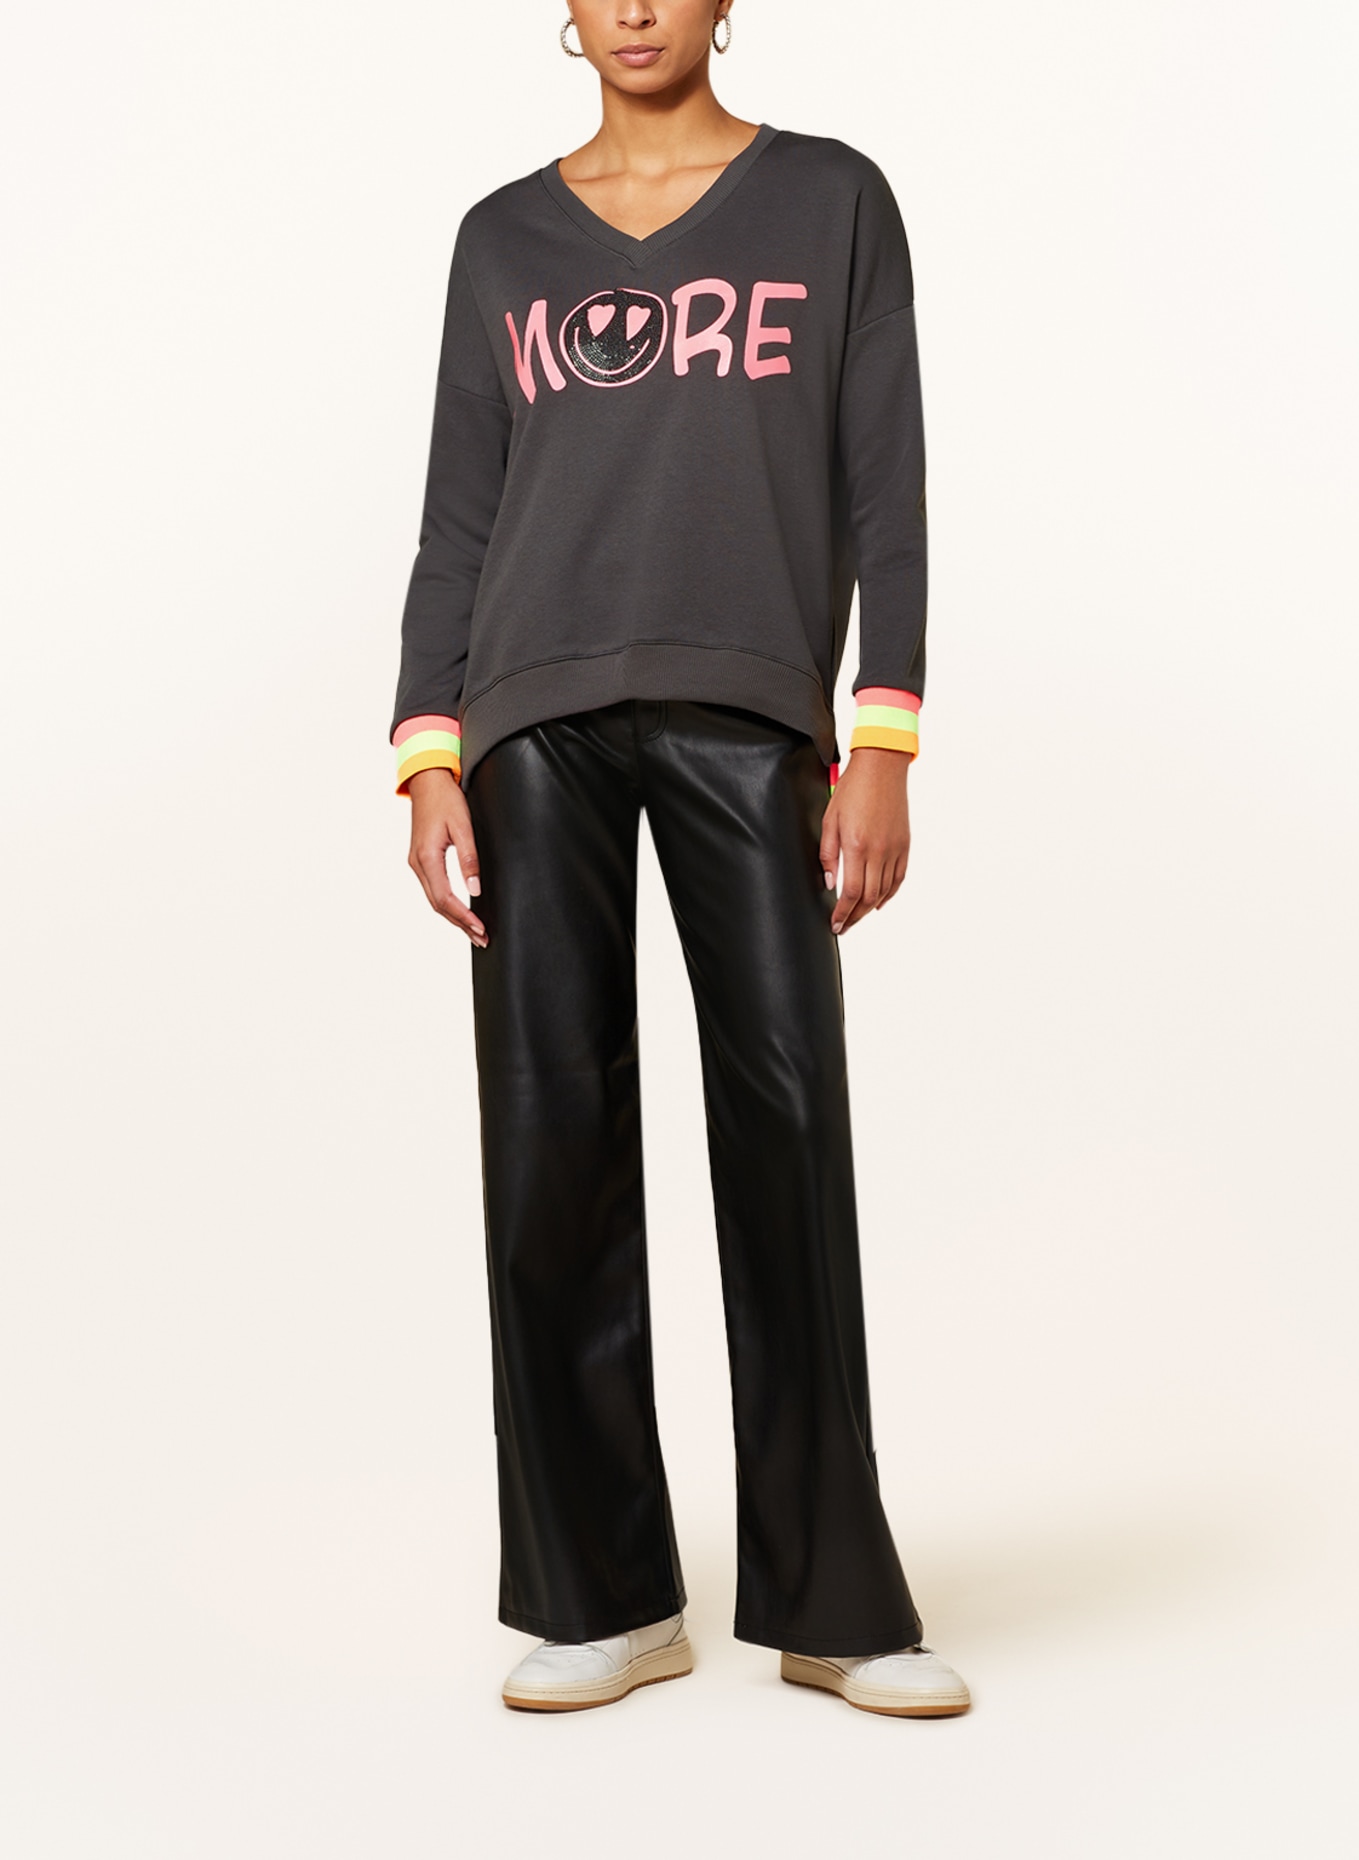 miss goodlife Sweatshirt MORE with decorative gems, Color: DARK GRAY/ NEON PINK (Image 2)